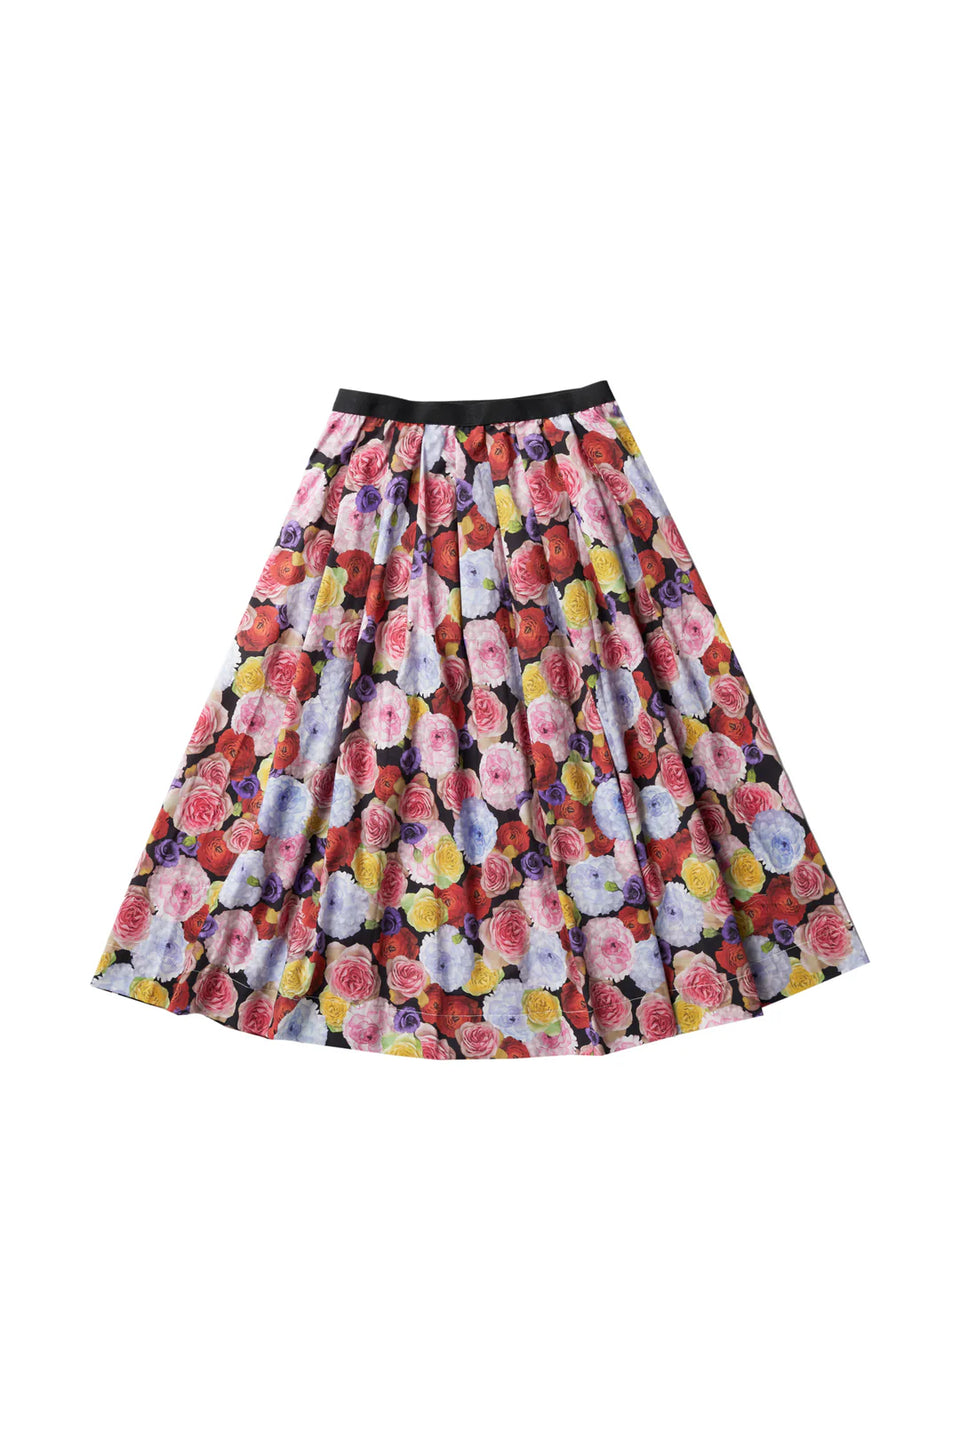 Elle Oh Elle Multicolor Rose Wide Pleat Skirt